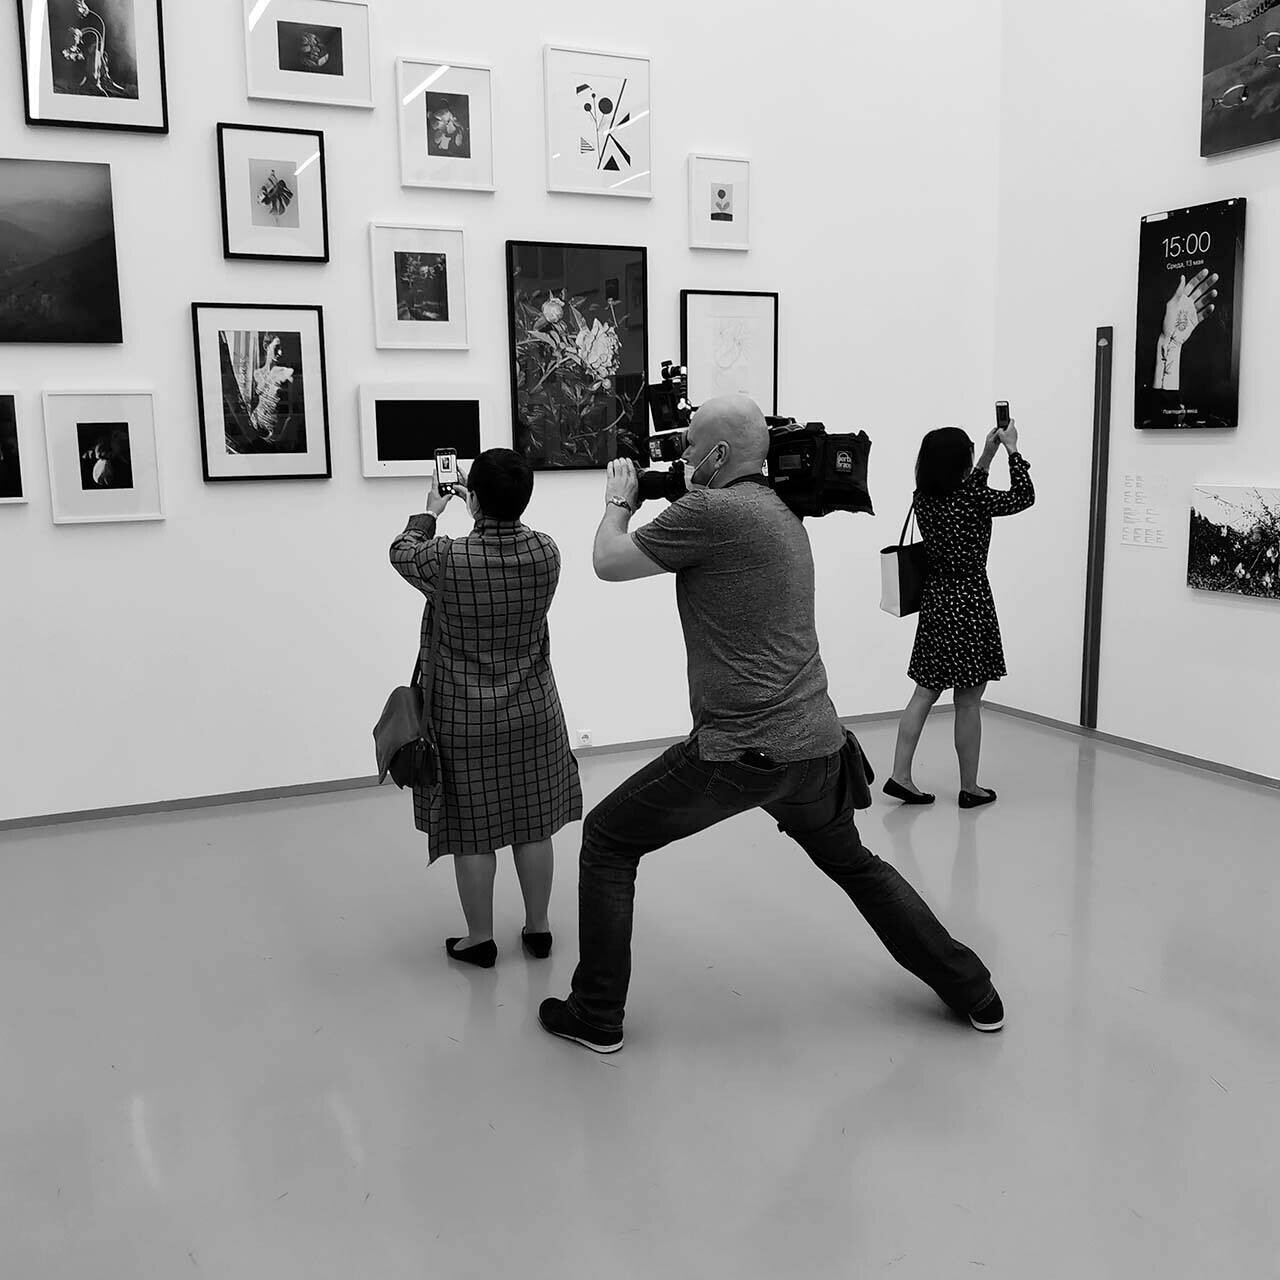 Мультимедиа Арт Музей, Москва, 2020. Фотограф Борис Назаренко